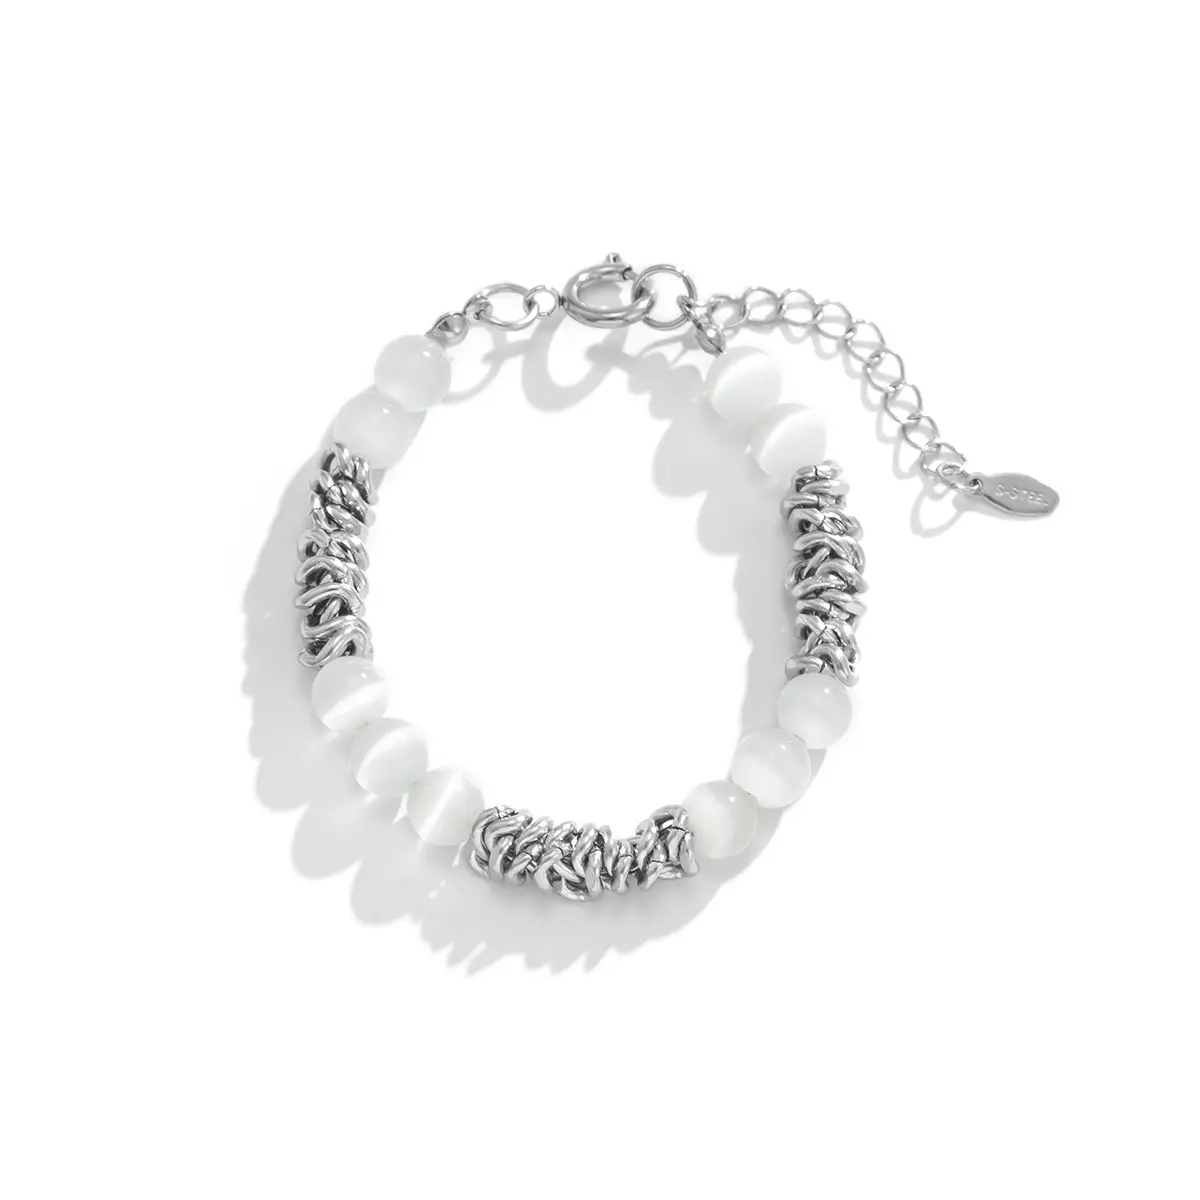 Titanium steel handmade chain white crystal bracelet men bracelet retro style design trendy men's jewelry